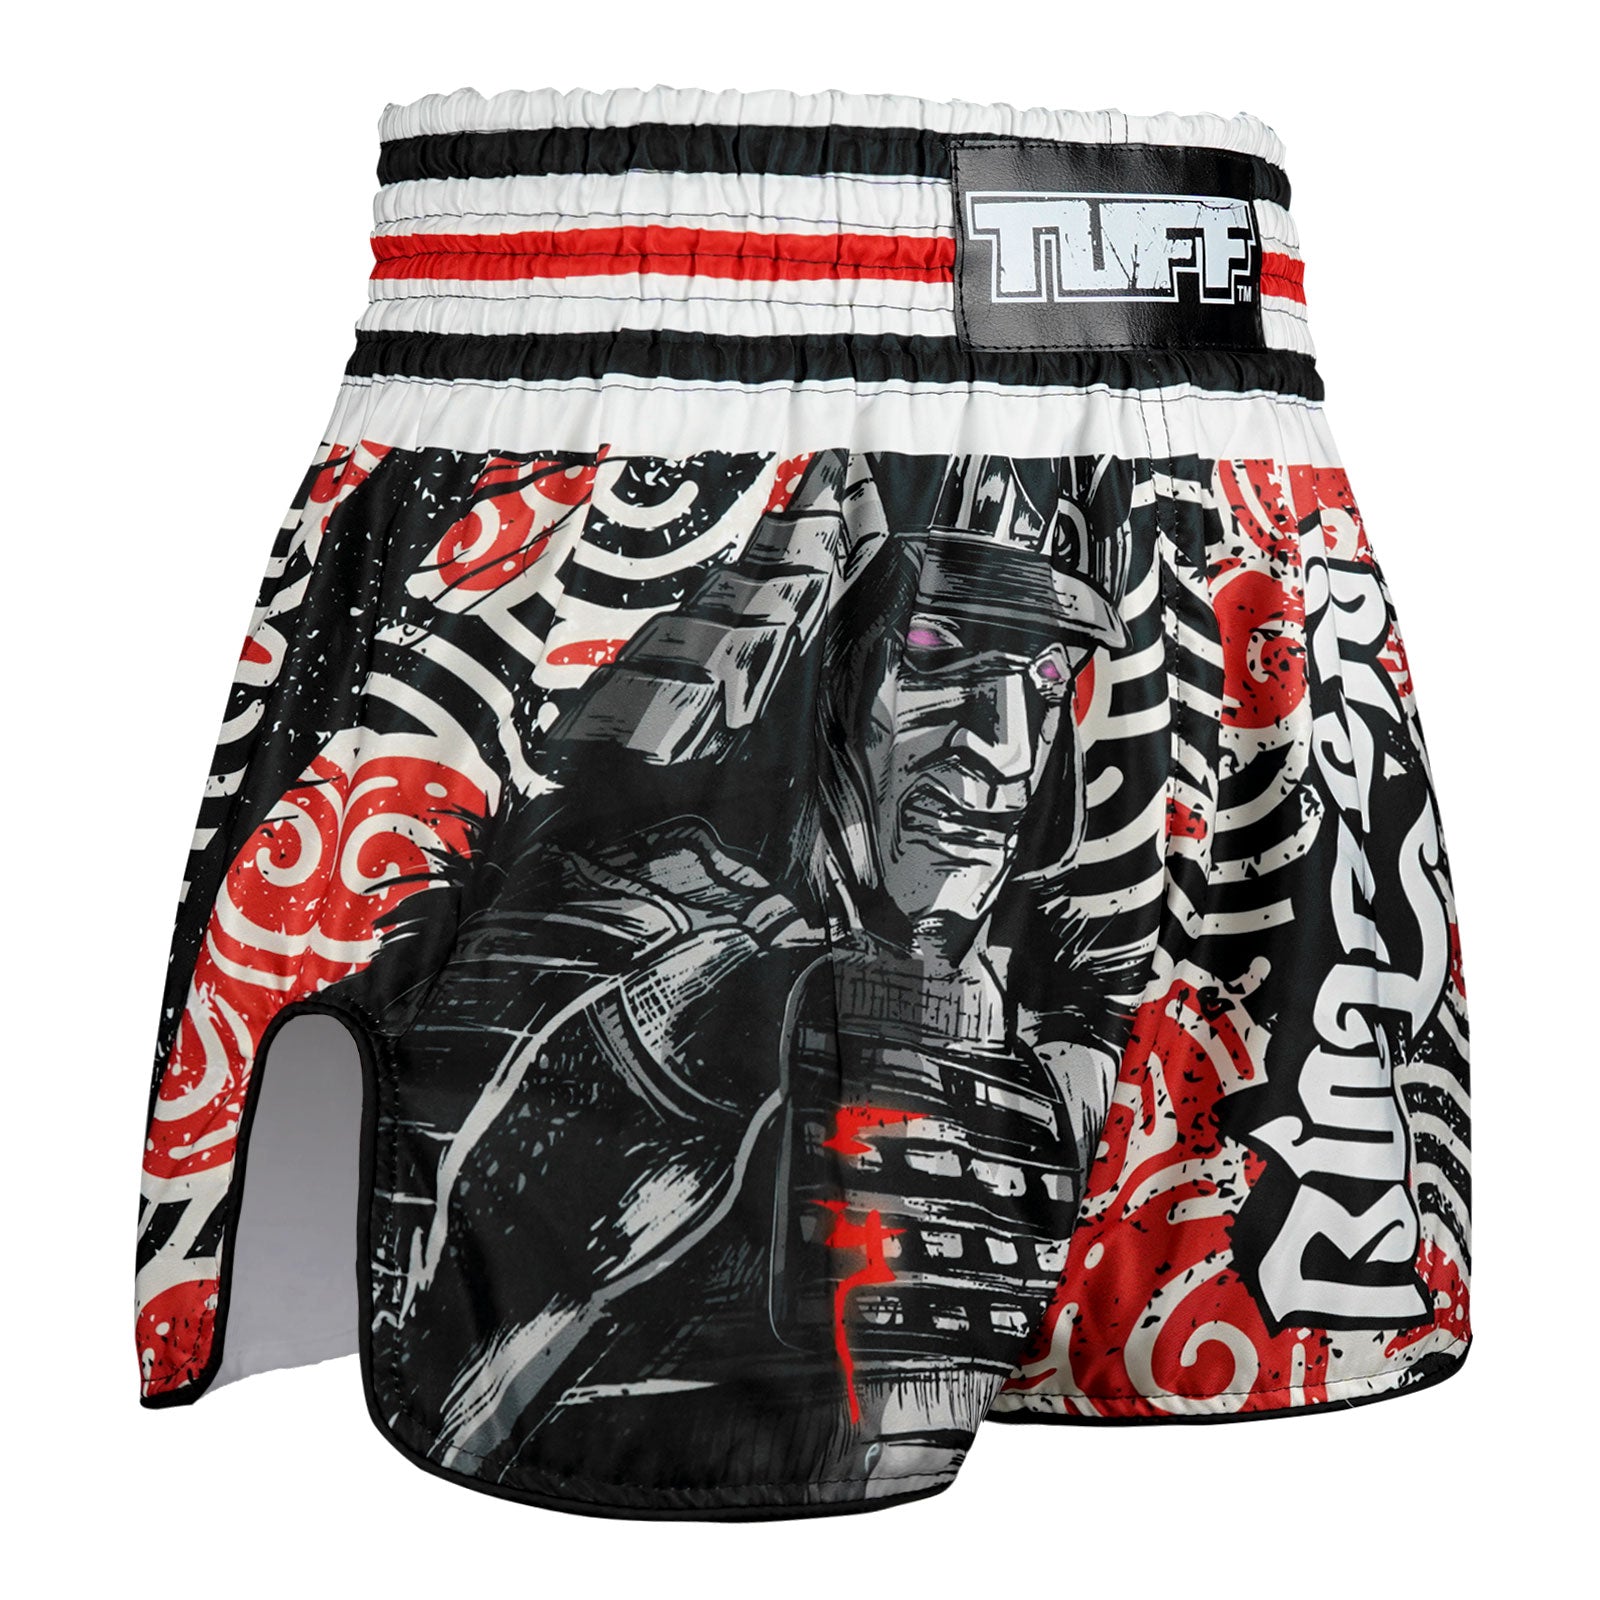 Shorts de Muay Thai Tuff High Cut Retro Samurai 2